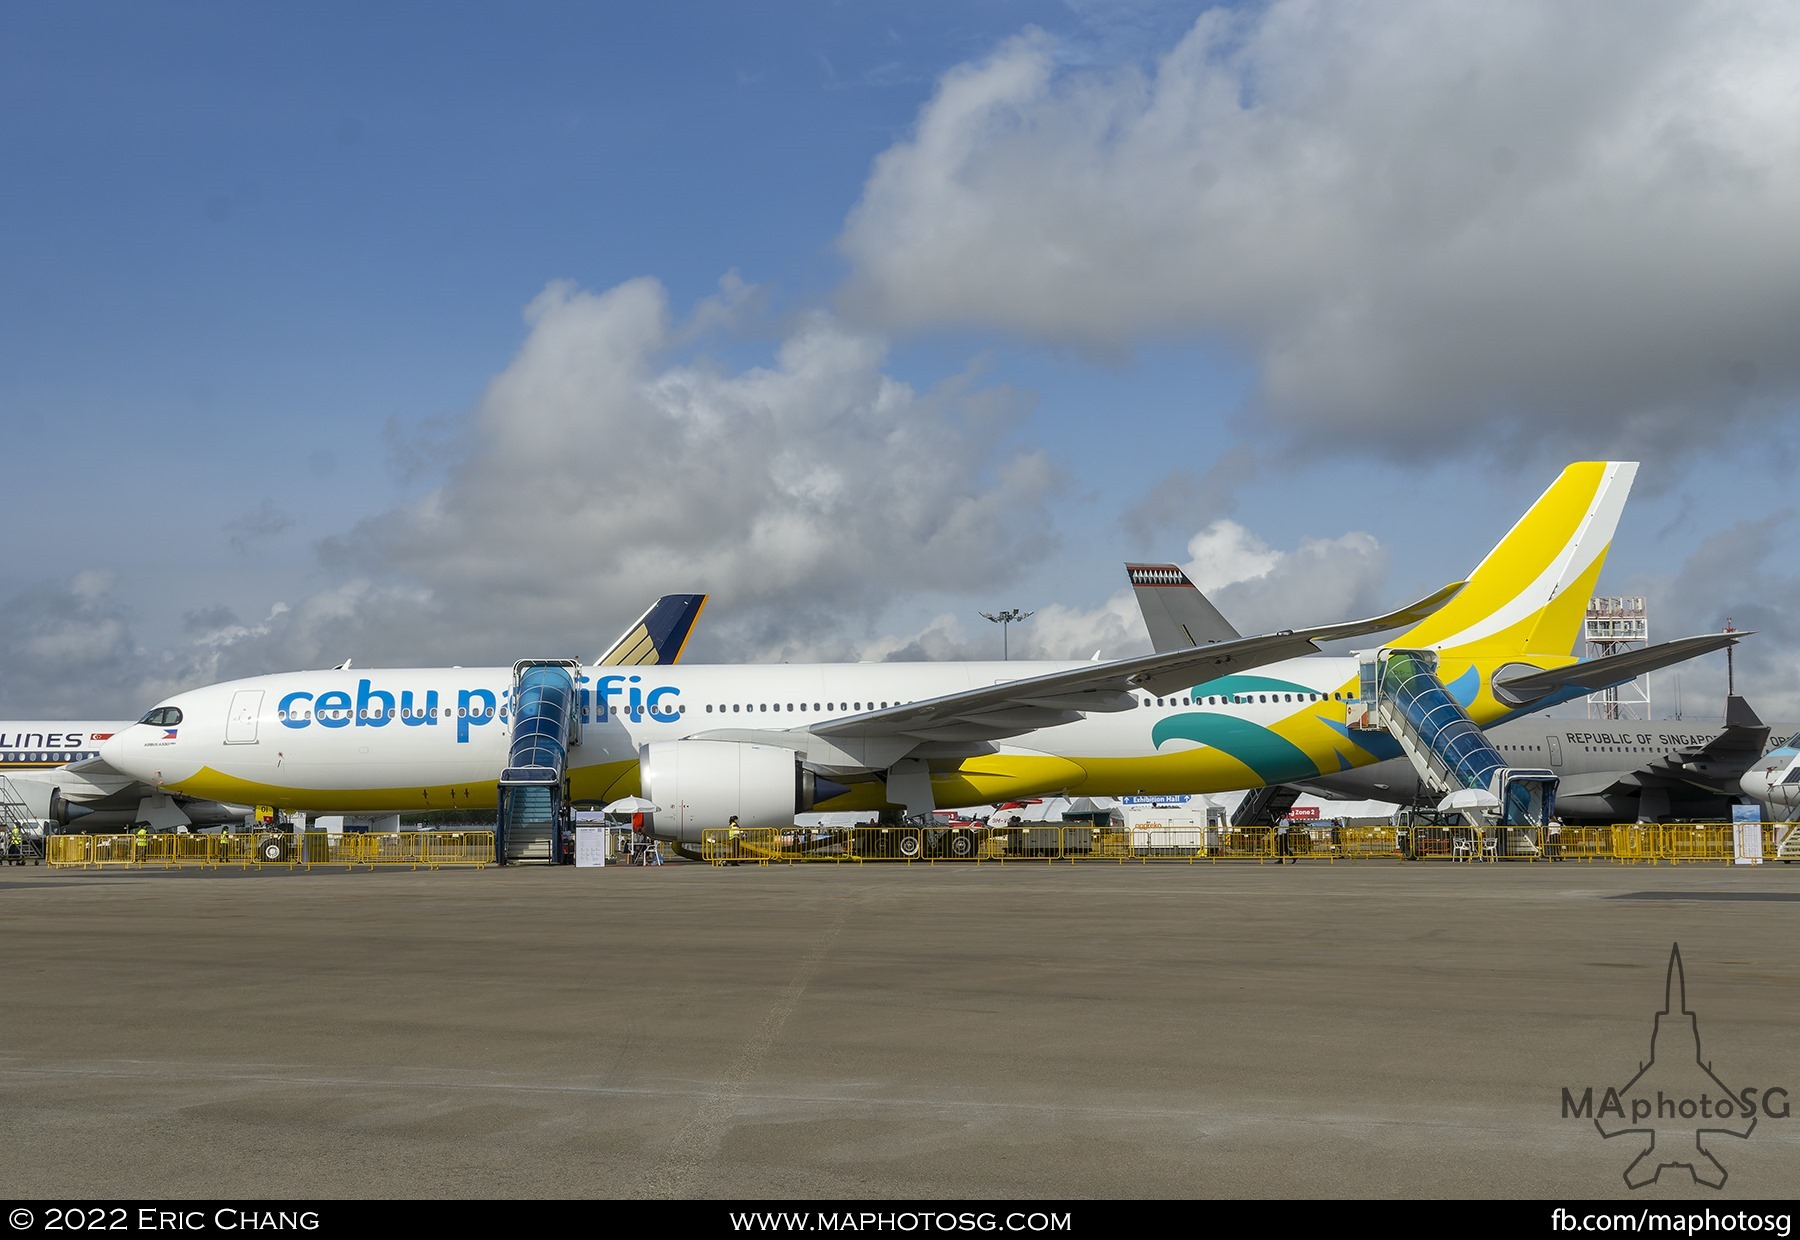 Cebu Pacific Airbus A330neo